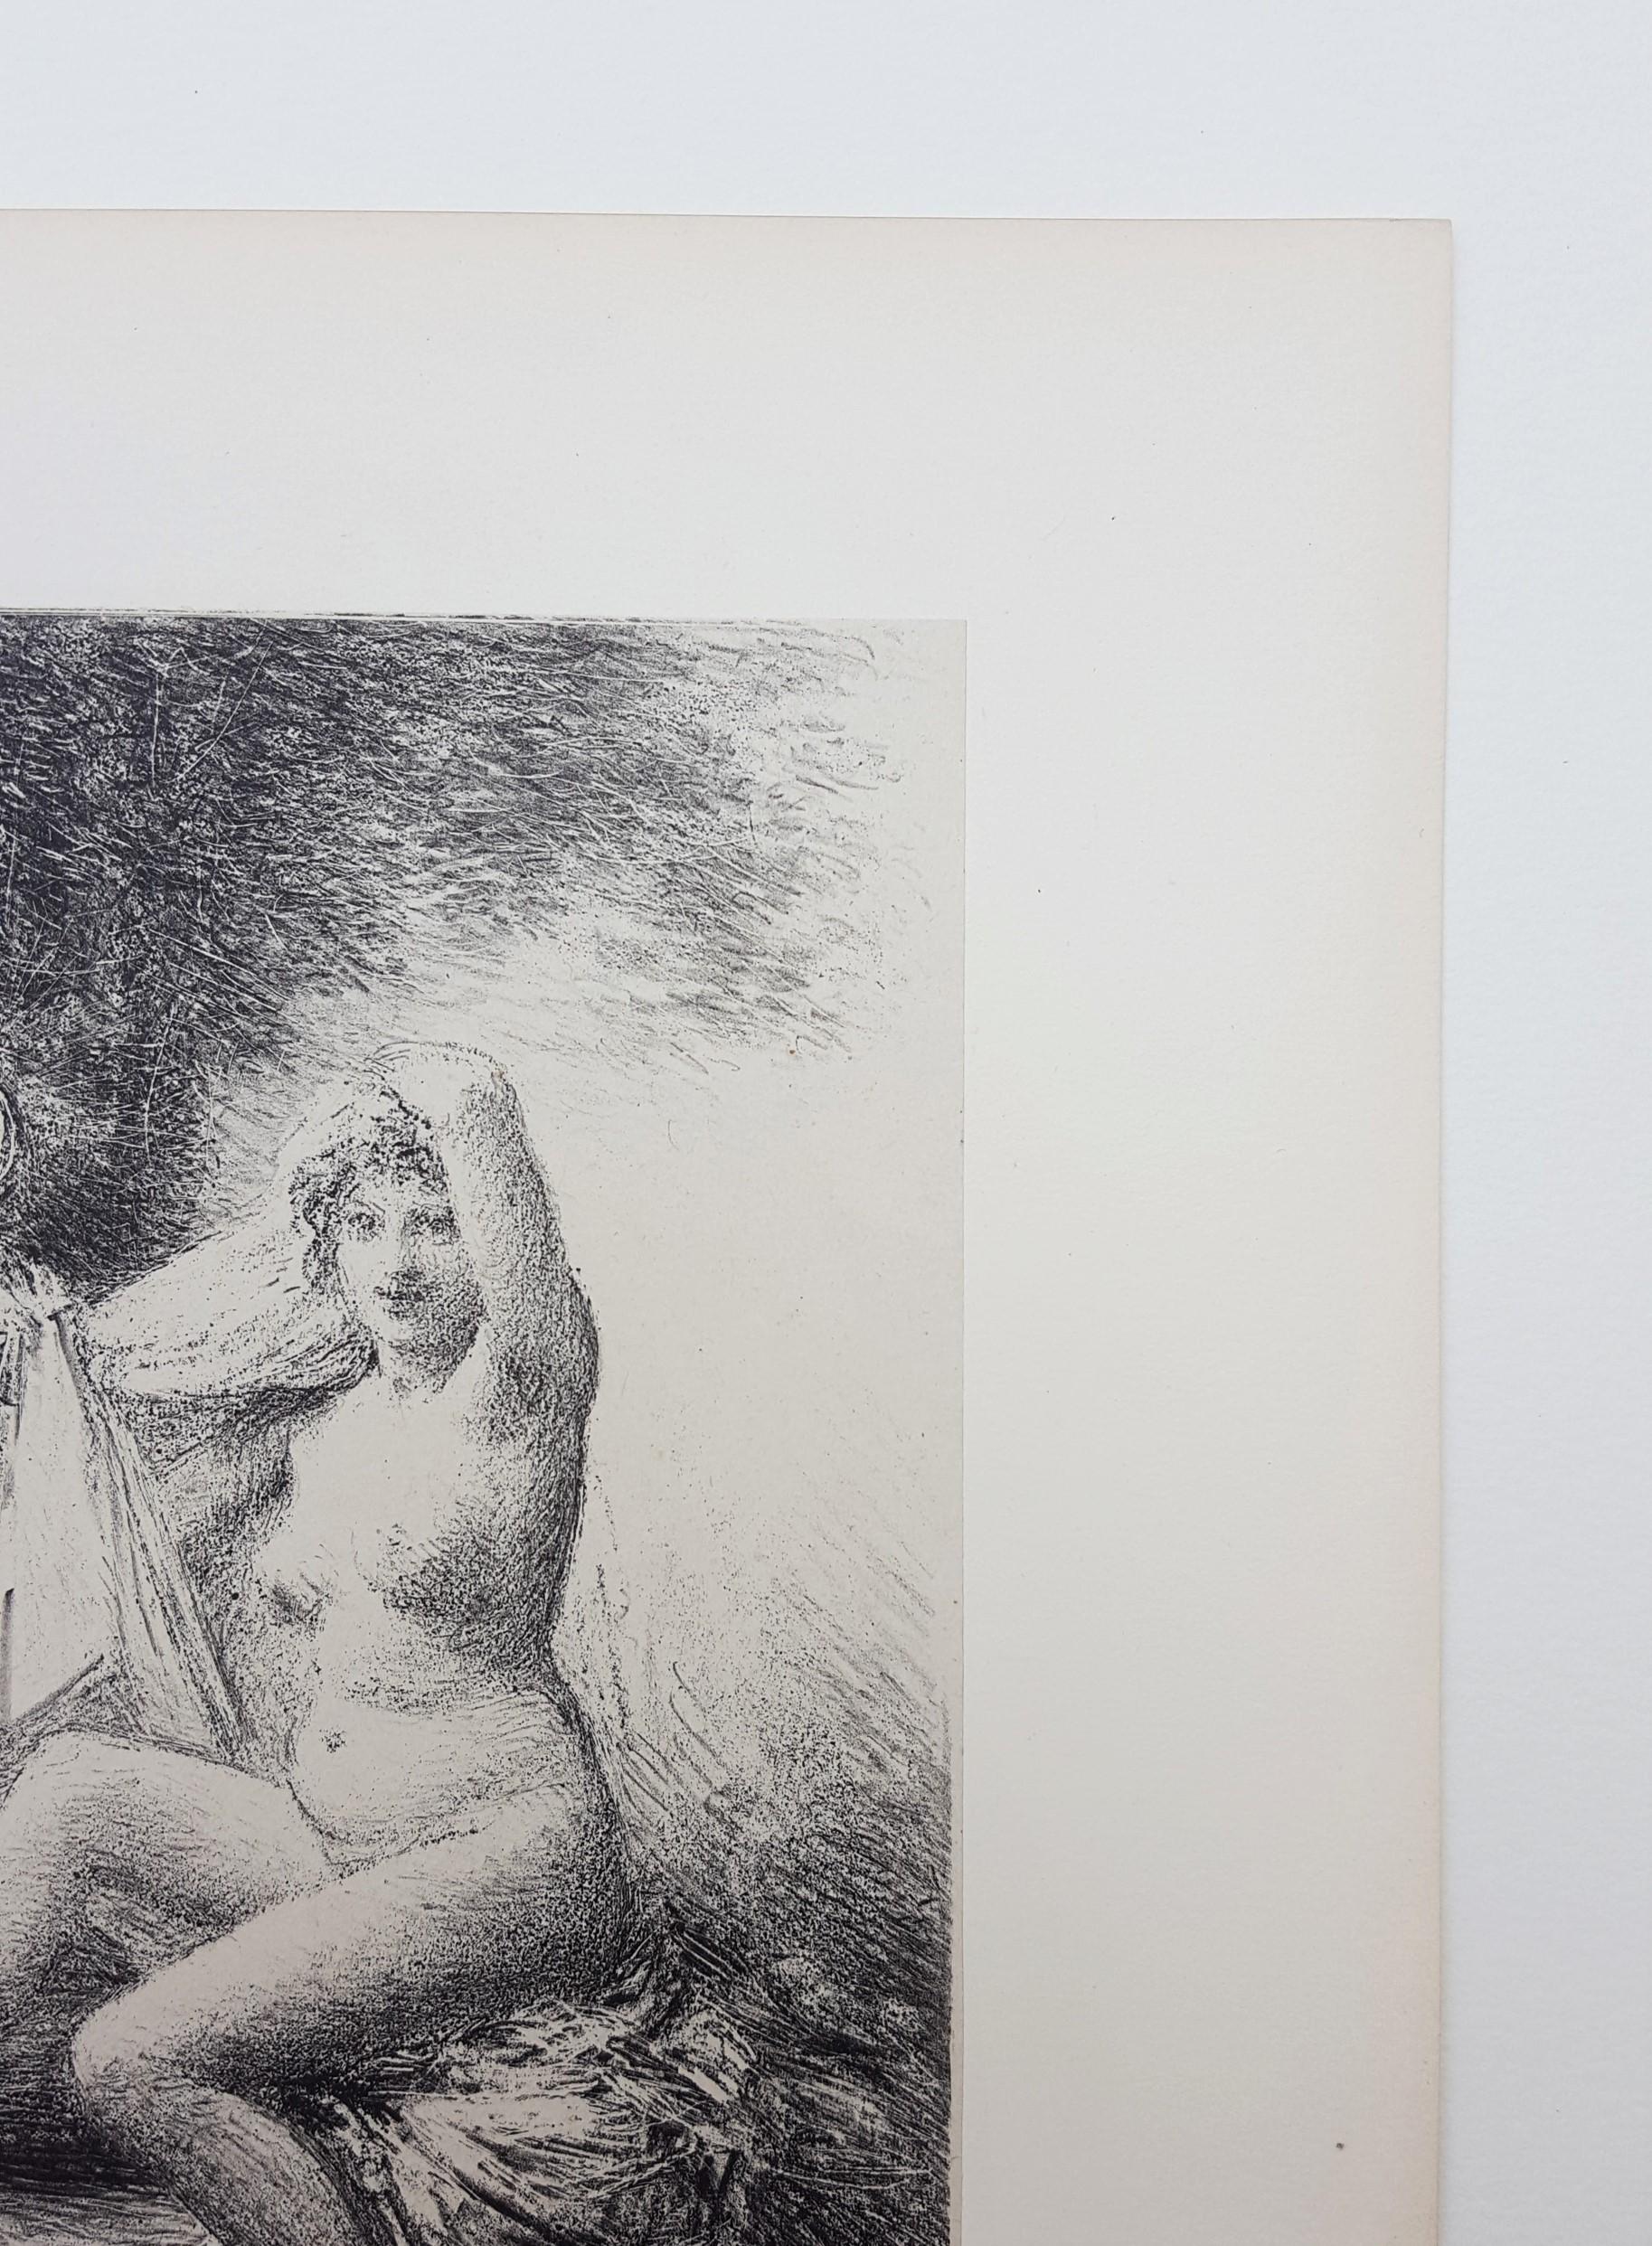 Künstler: Henri Fantin-Latour (Franzose, 1836-1904)
Titel: 